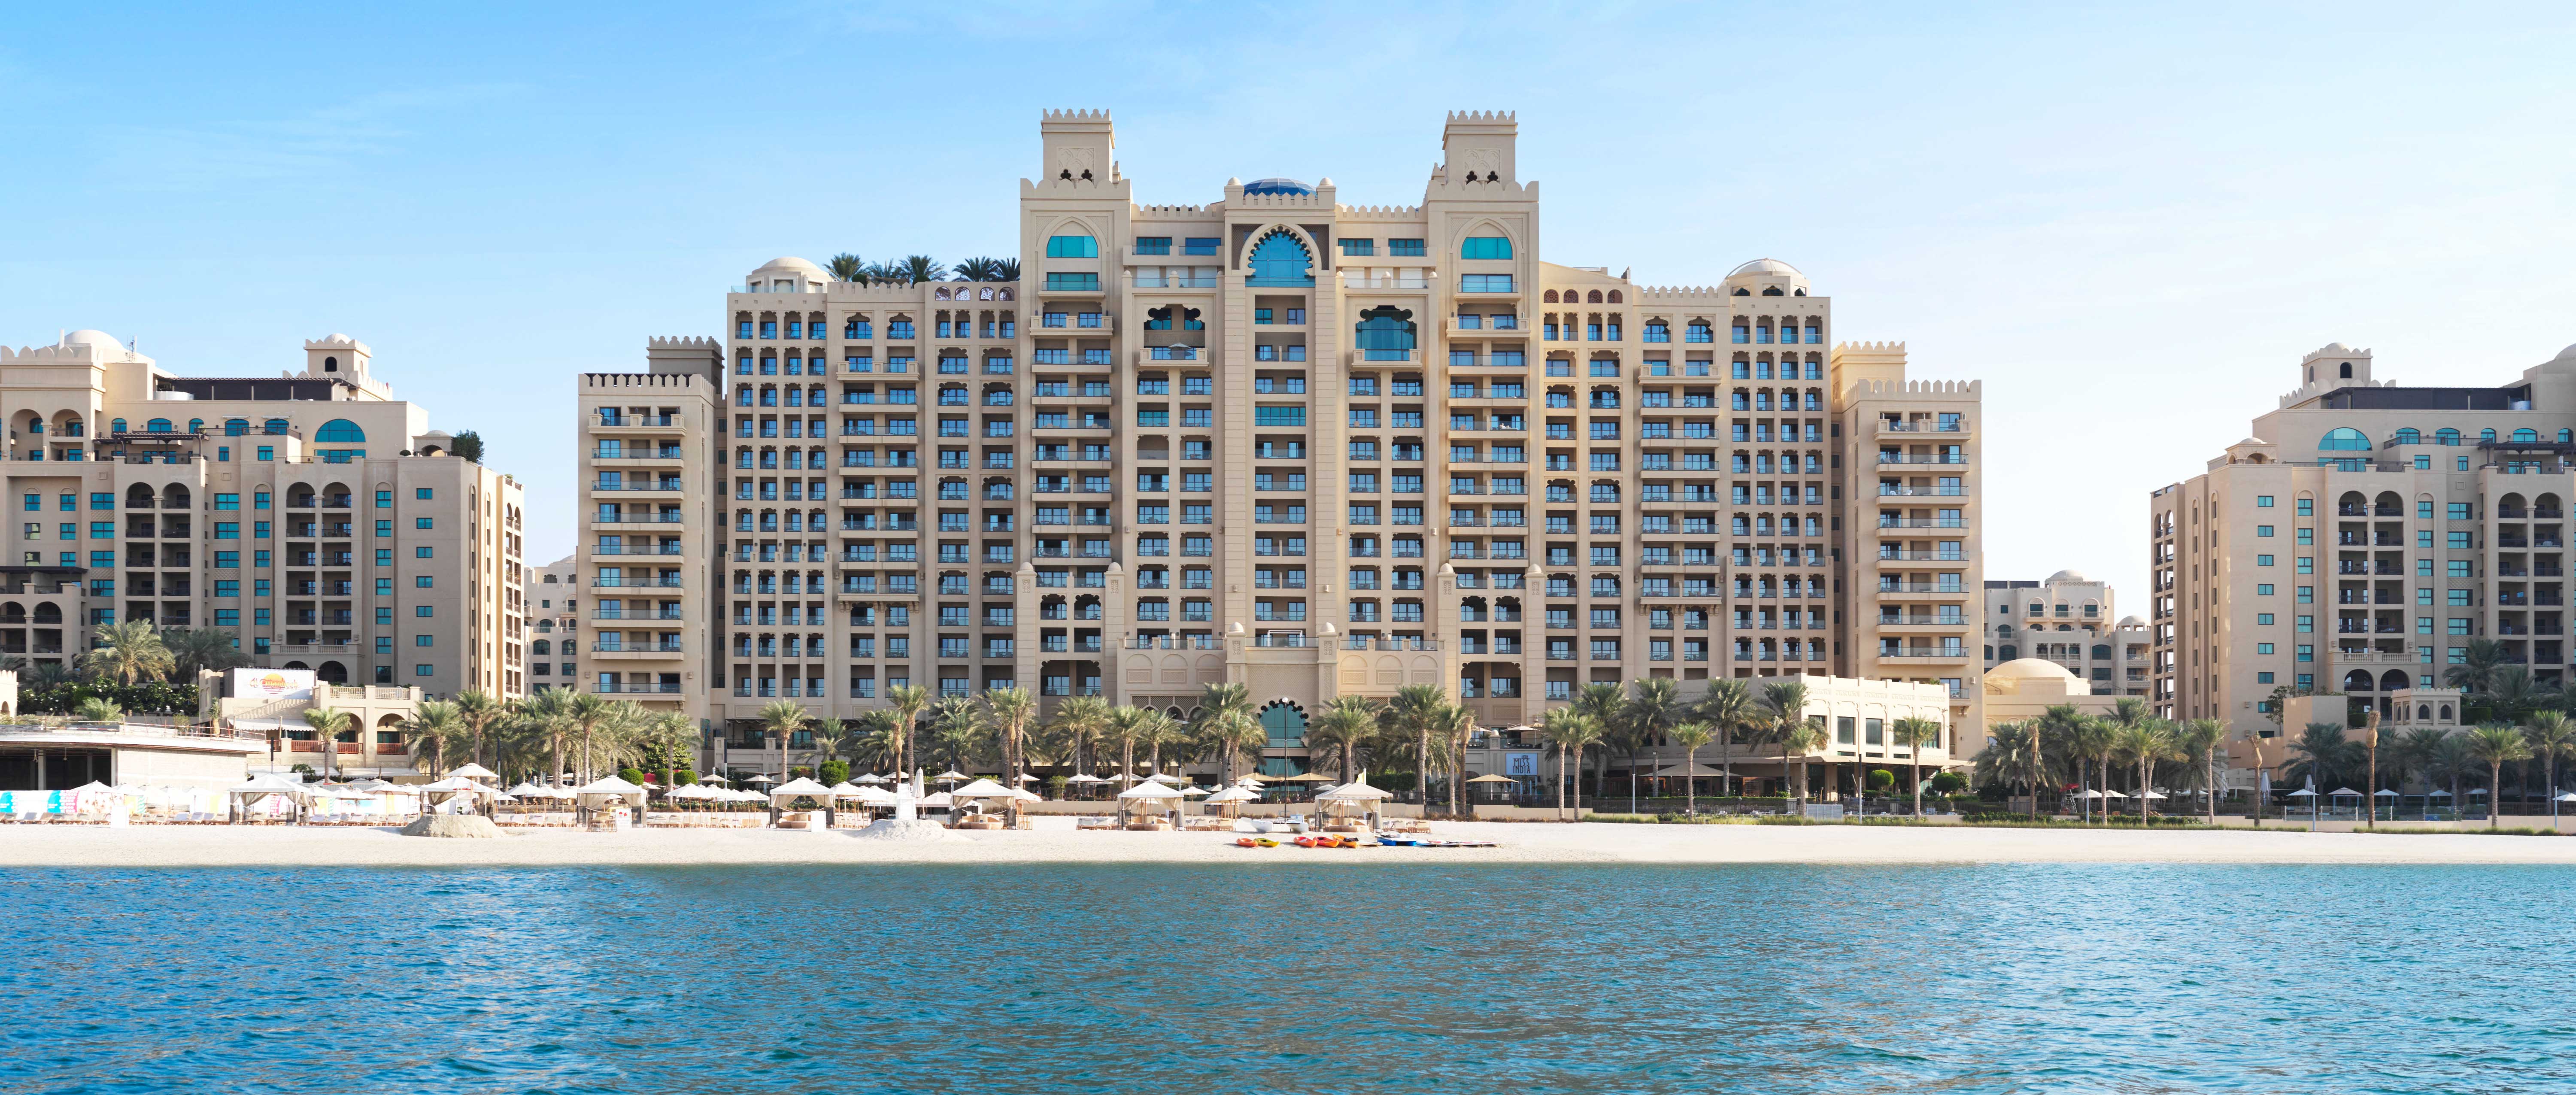 e8b31990 fdd3 4d72 86b9 18f2fdcd0abf Aurelio Giraudo appointed Cluster General Manager at Fairmont The Palm, Movenpick JLT, Riva Beach Club, and Th8 Hotel, Dubai, UAE 